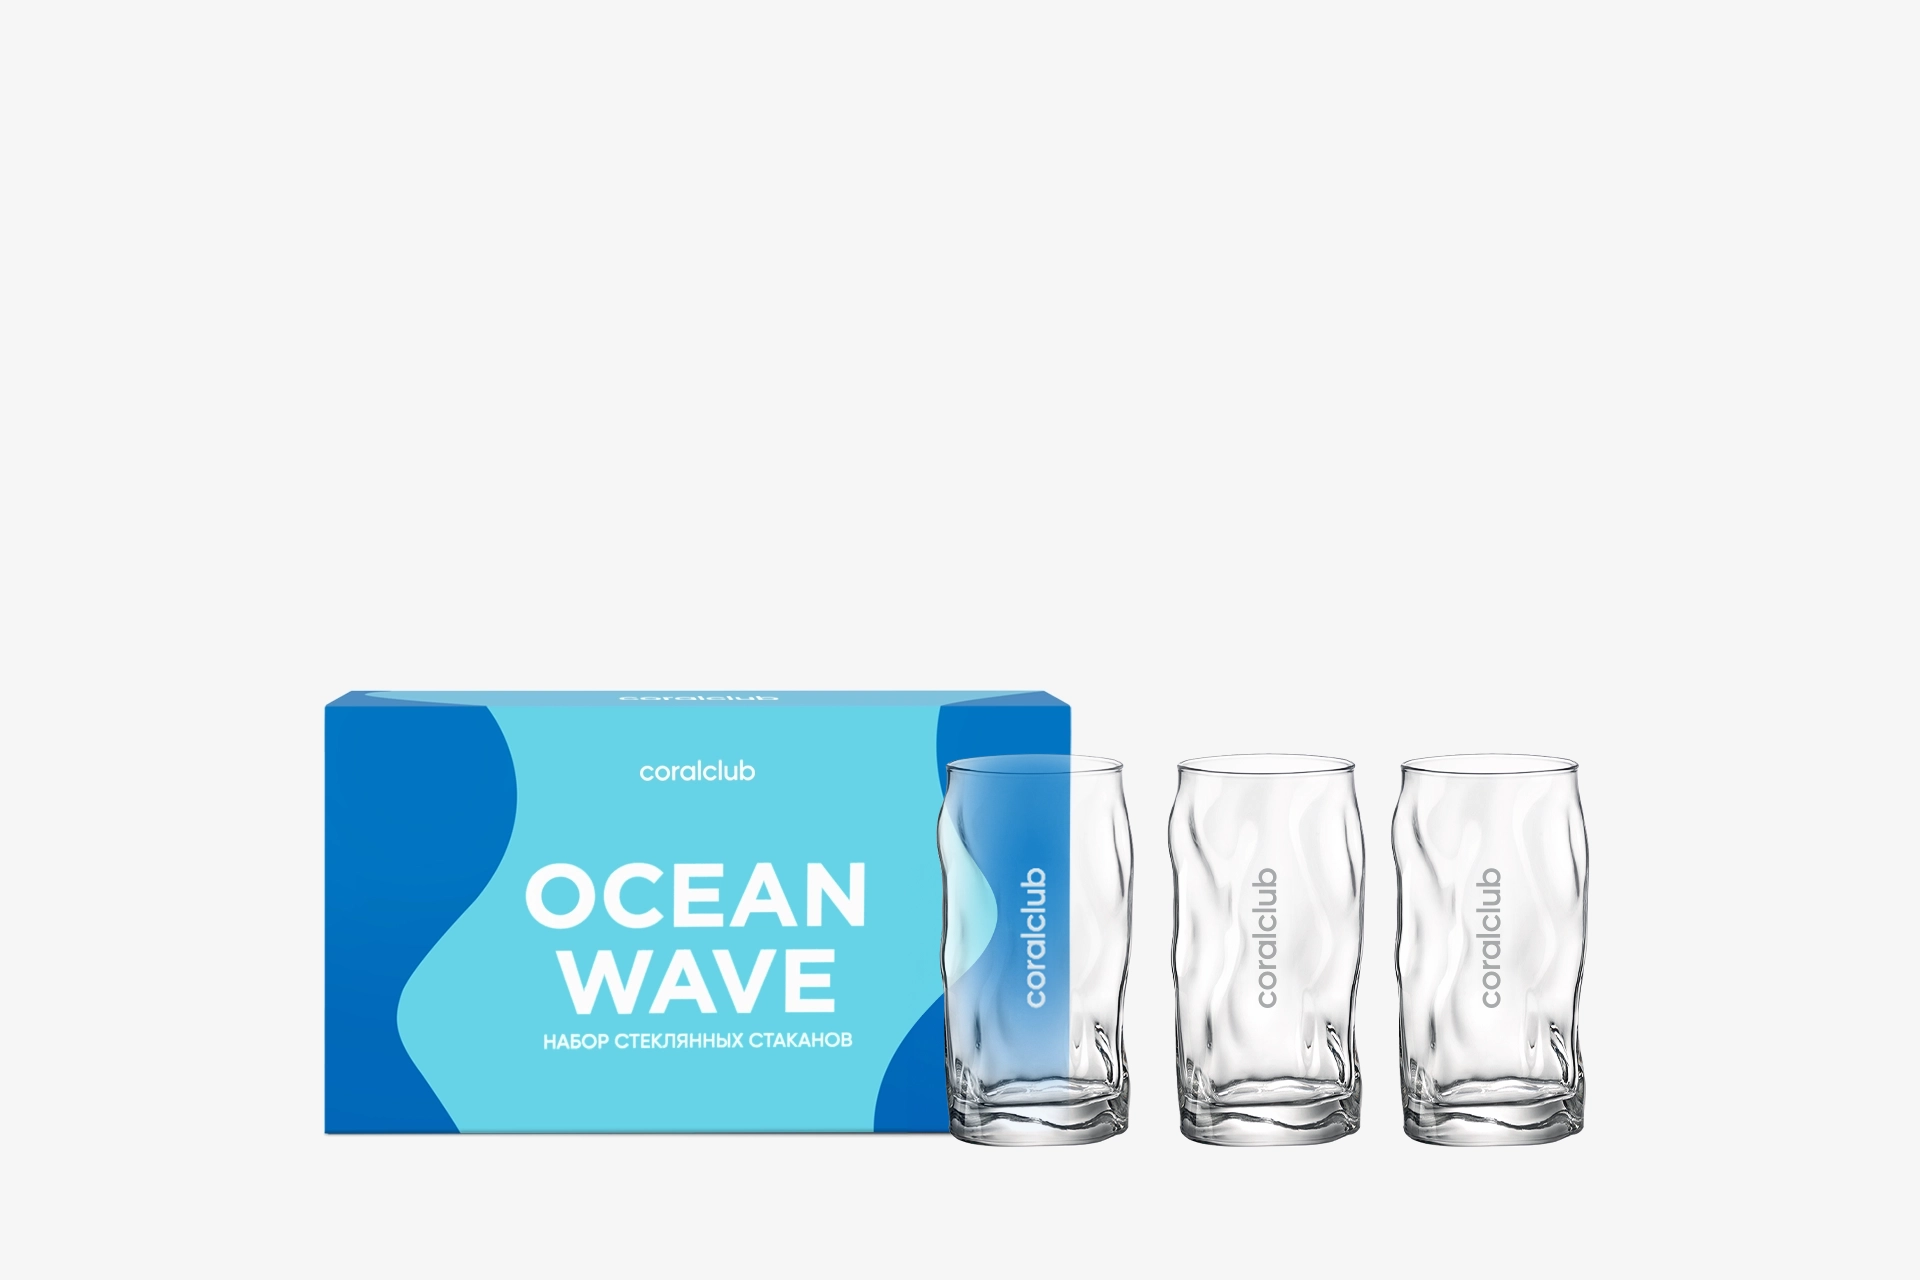 Set of glasses OCEAN WAVE